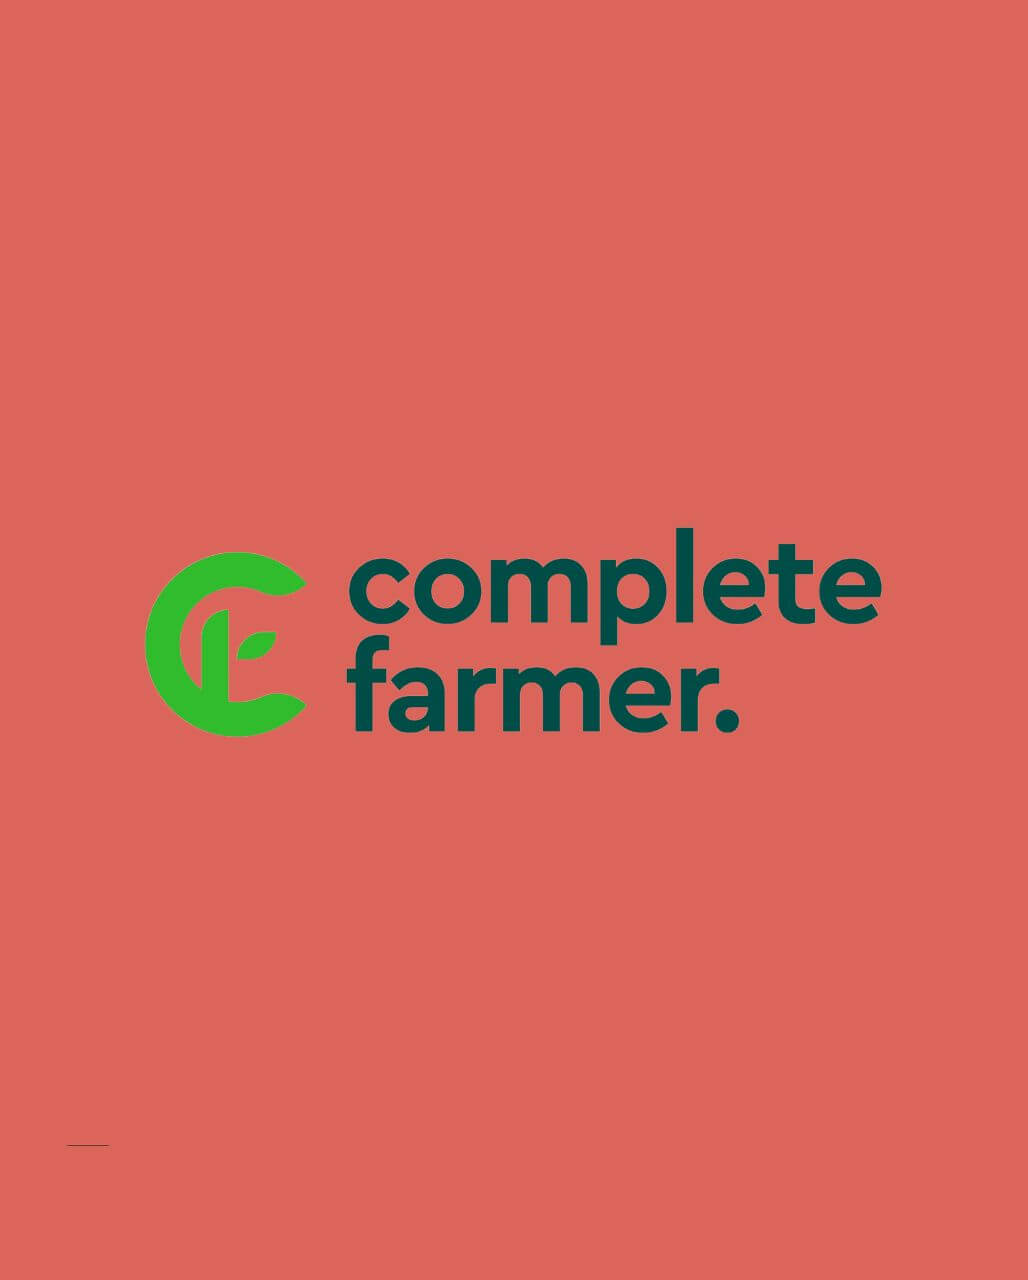 Complete farmer logo